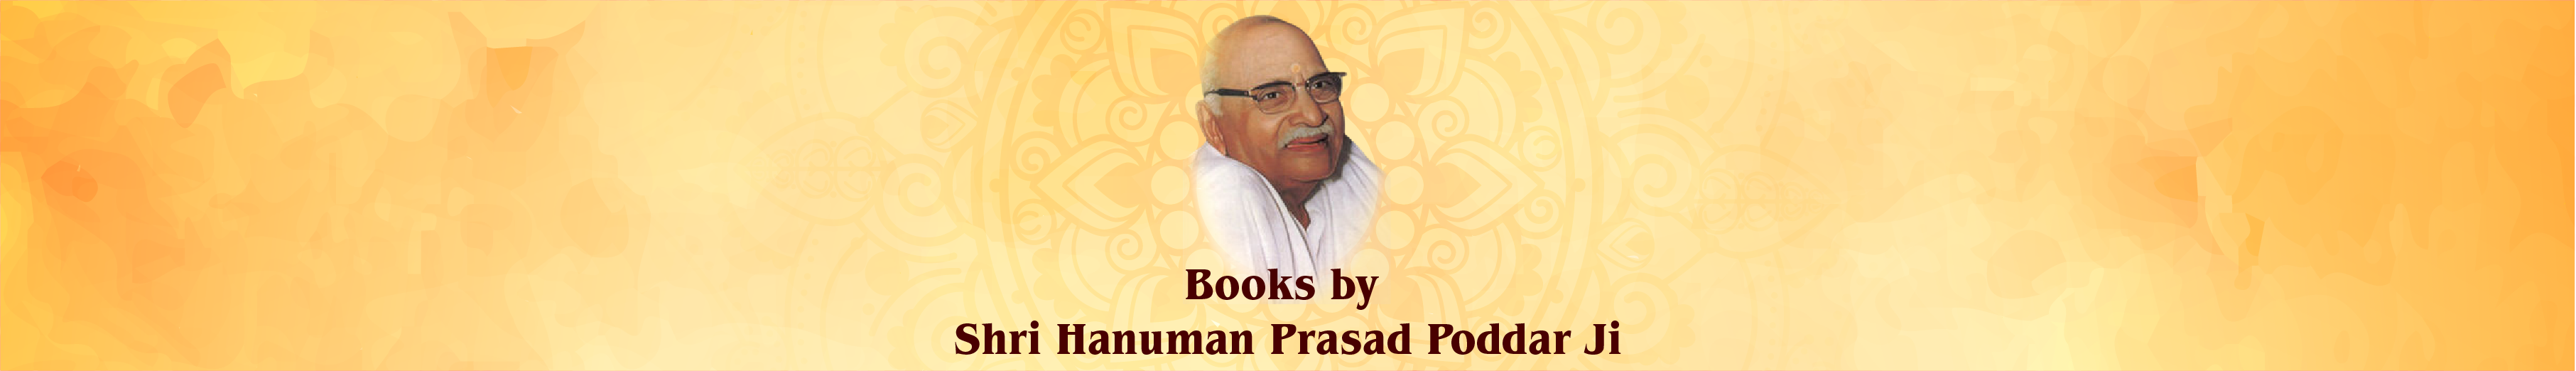 Books by Shri Hanuman Prasad Poddar Ji (Gita Press)